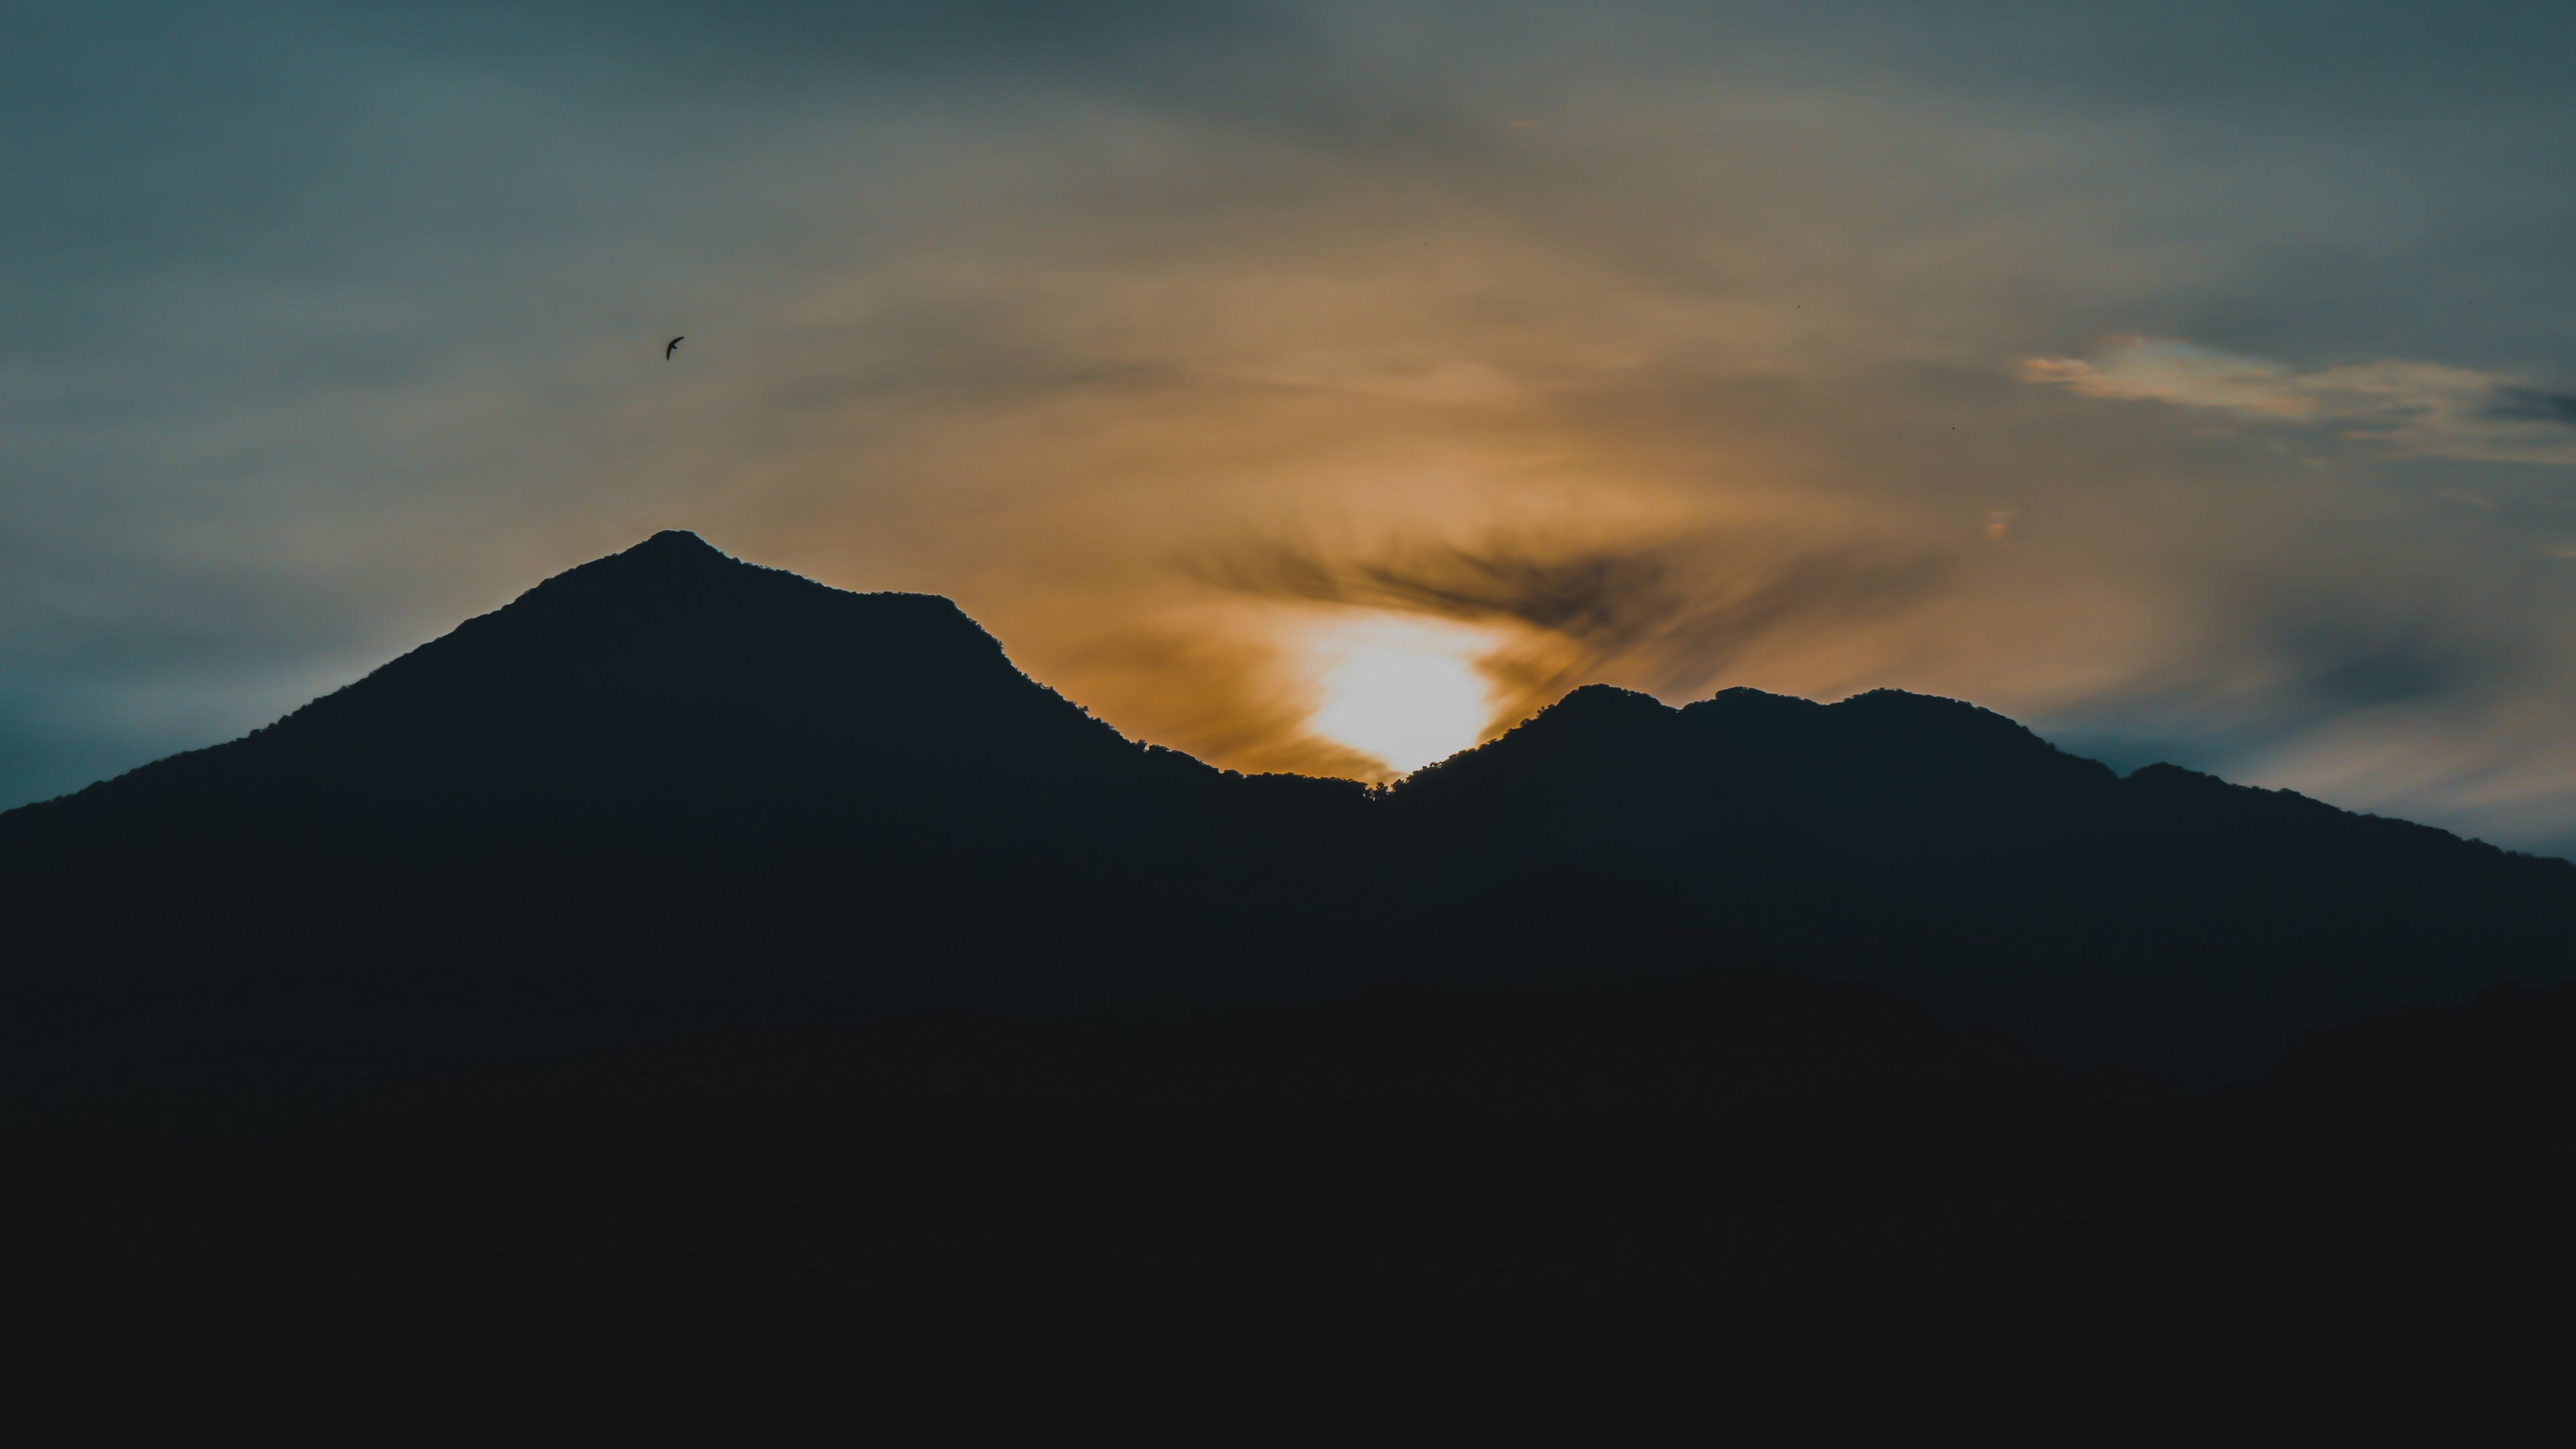 Download wallpaper 3840x2160 mountains, sunset, dark 4k uhd 16:9 HD background